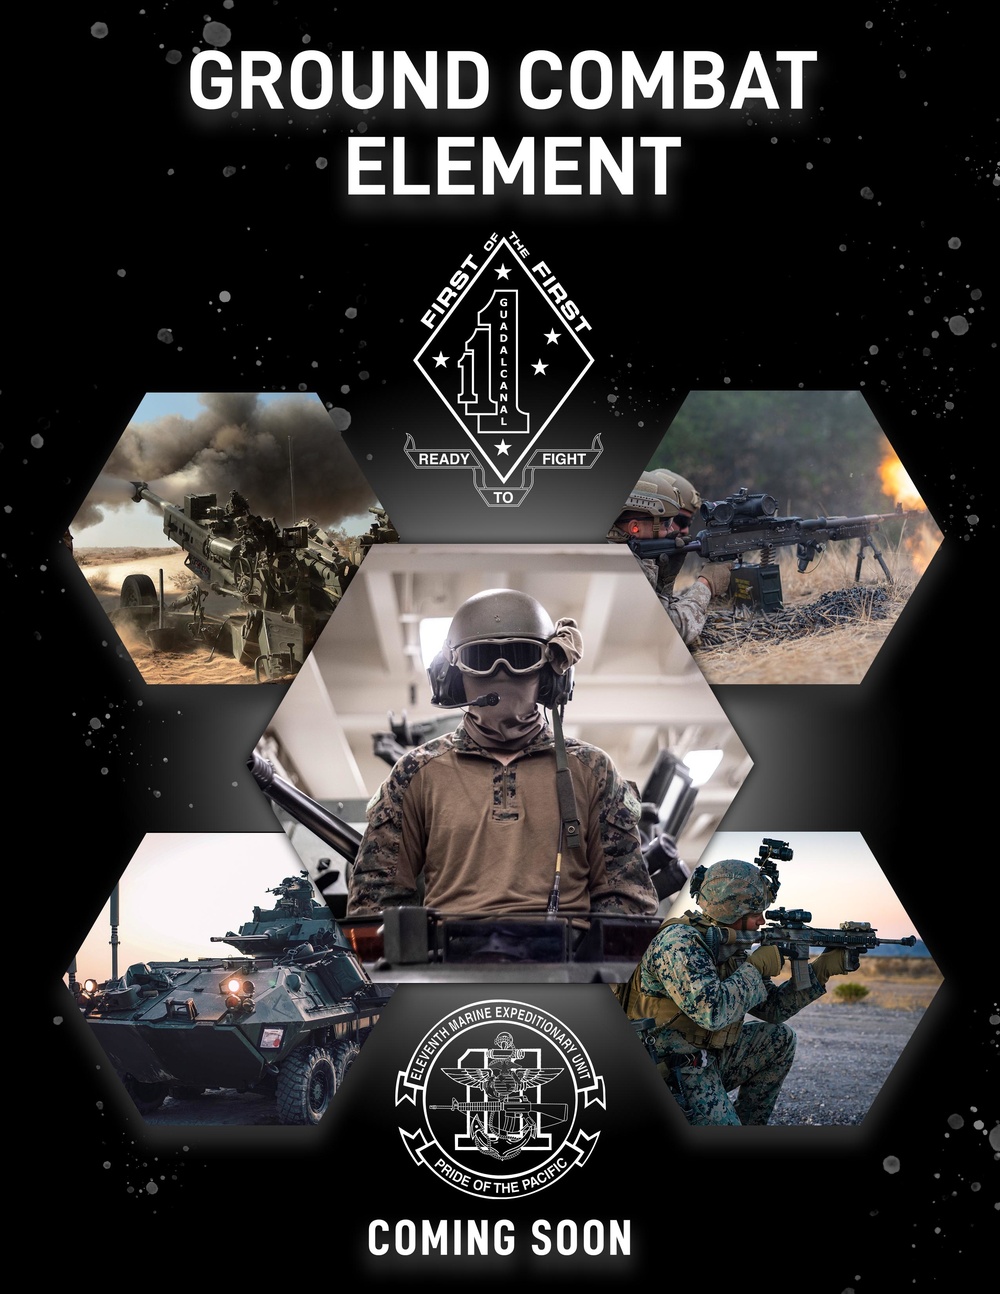 The Ground Combat Element